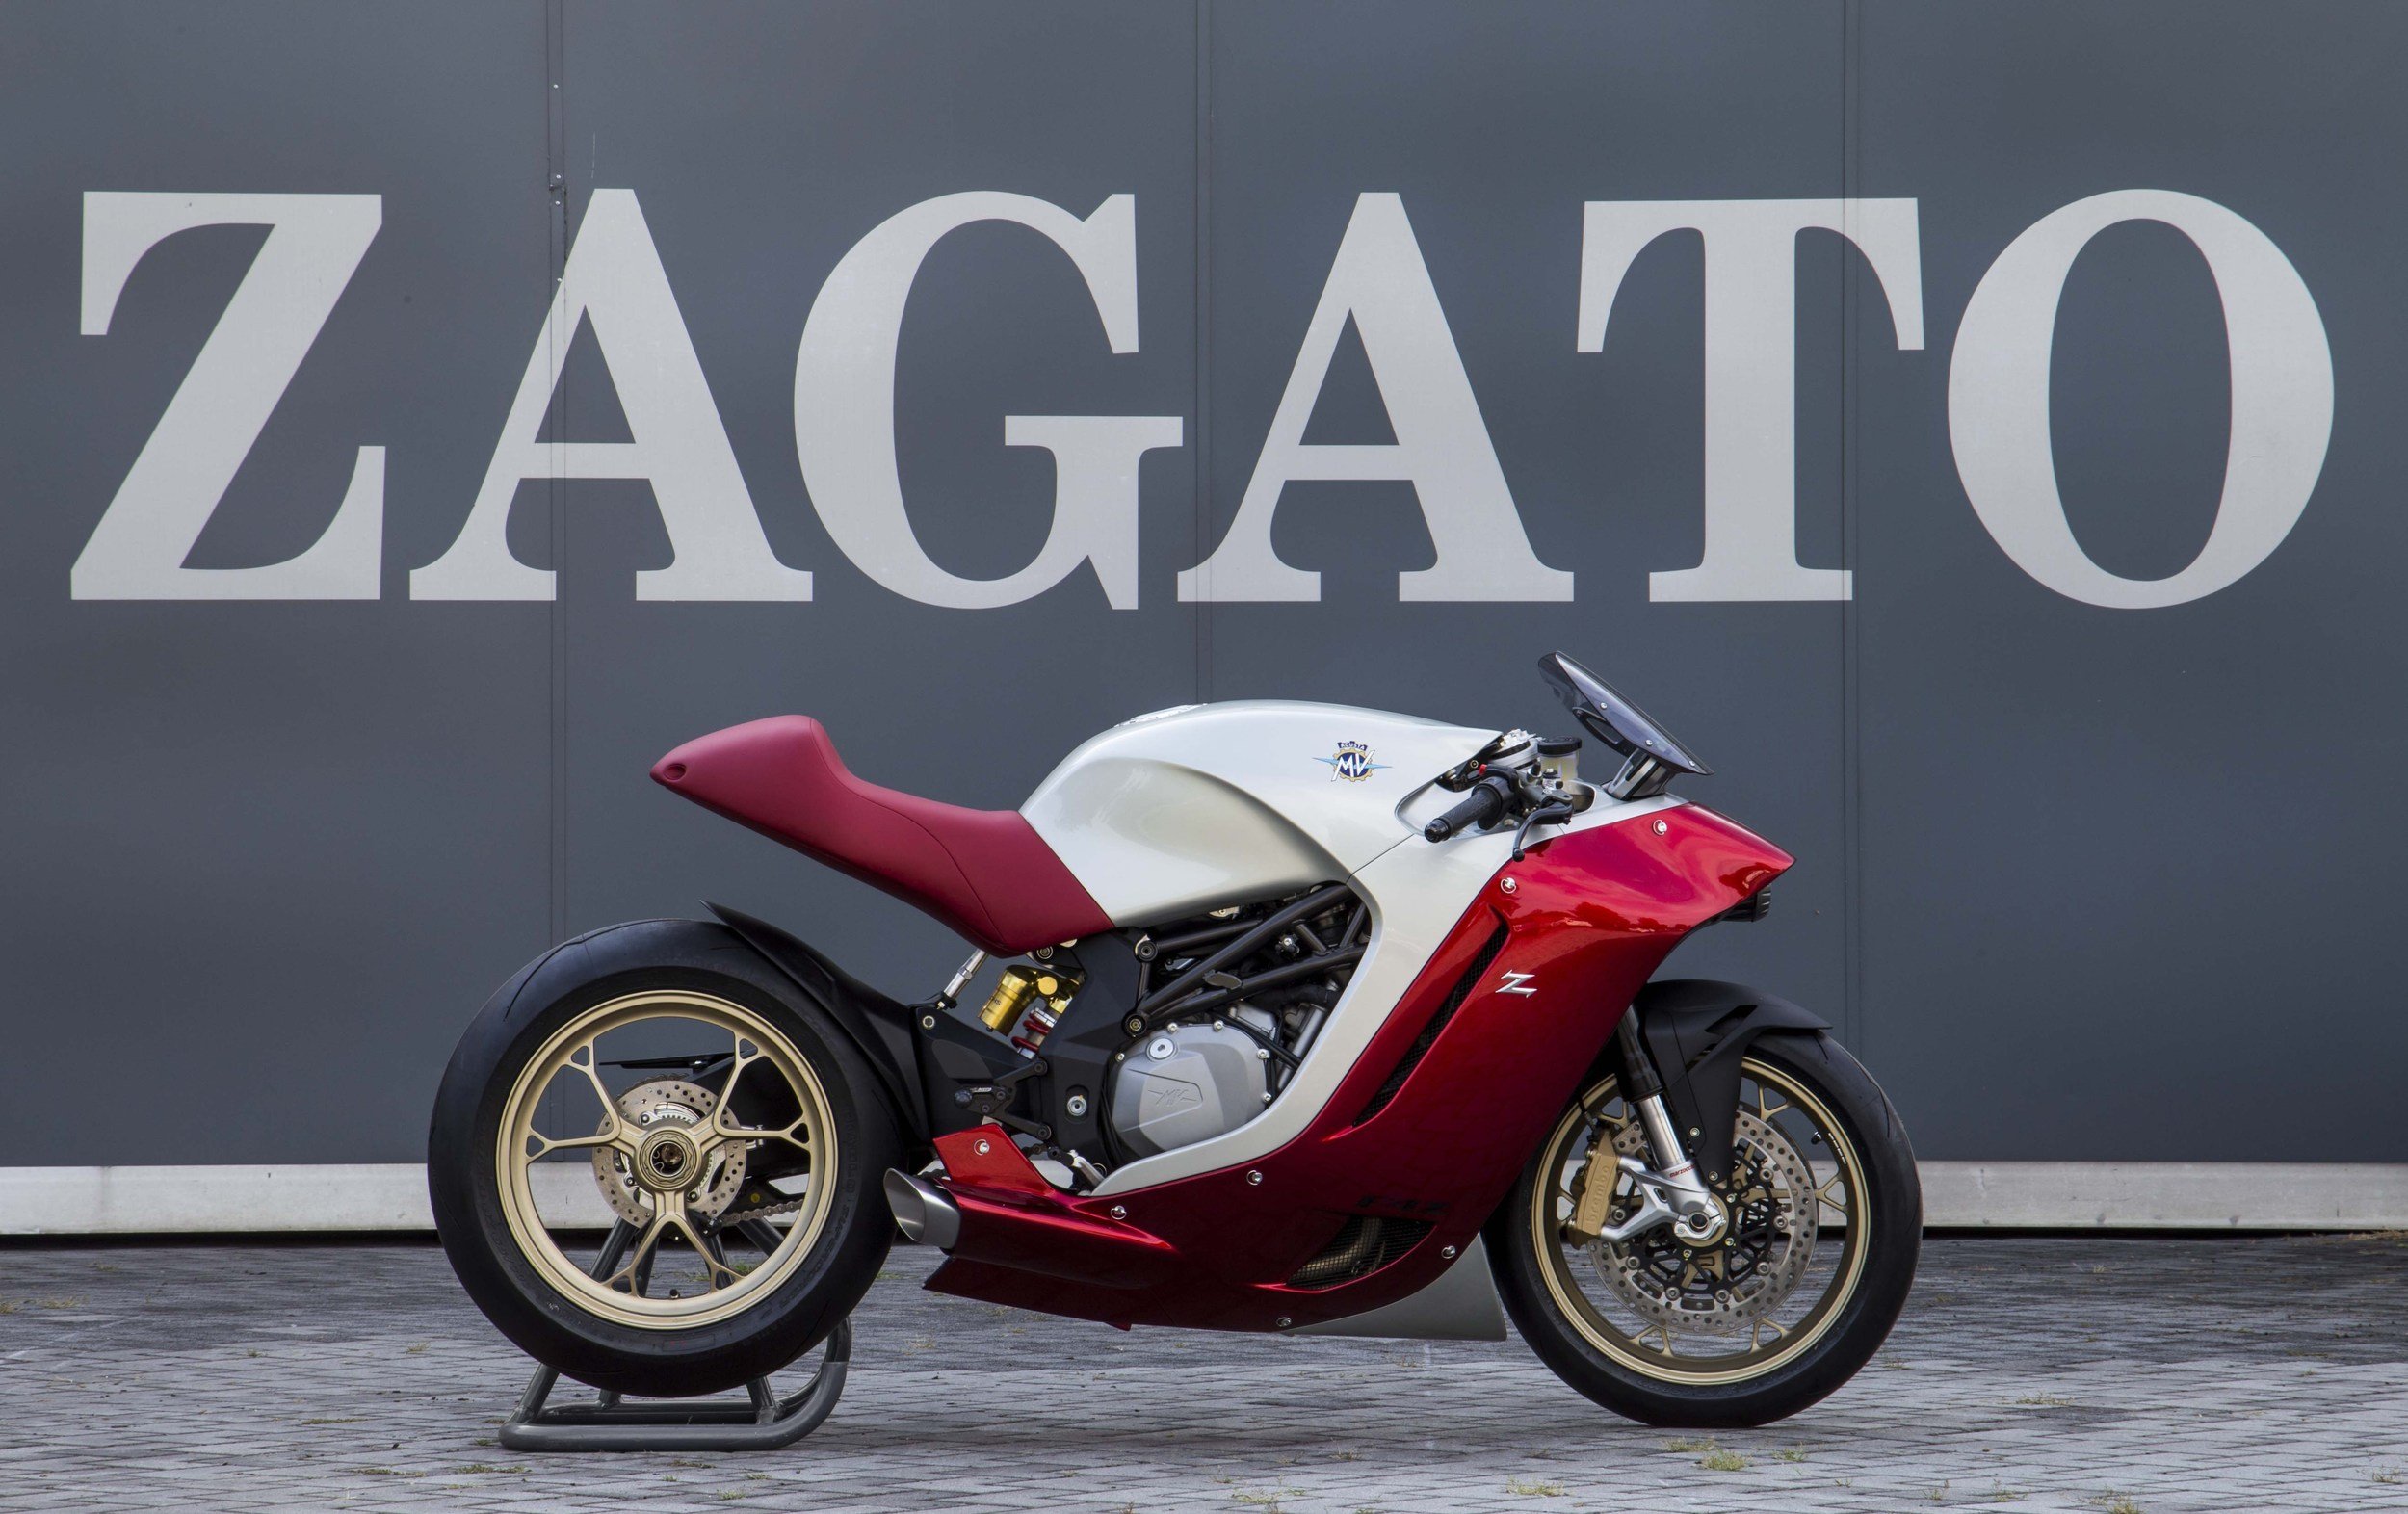 mv, Agusta, F4z, Zagato, Bike, Motorcycles, 2016 Wallpaper